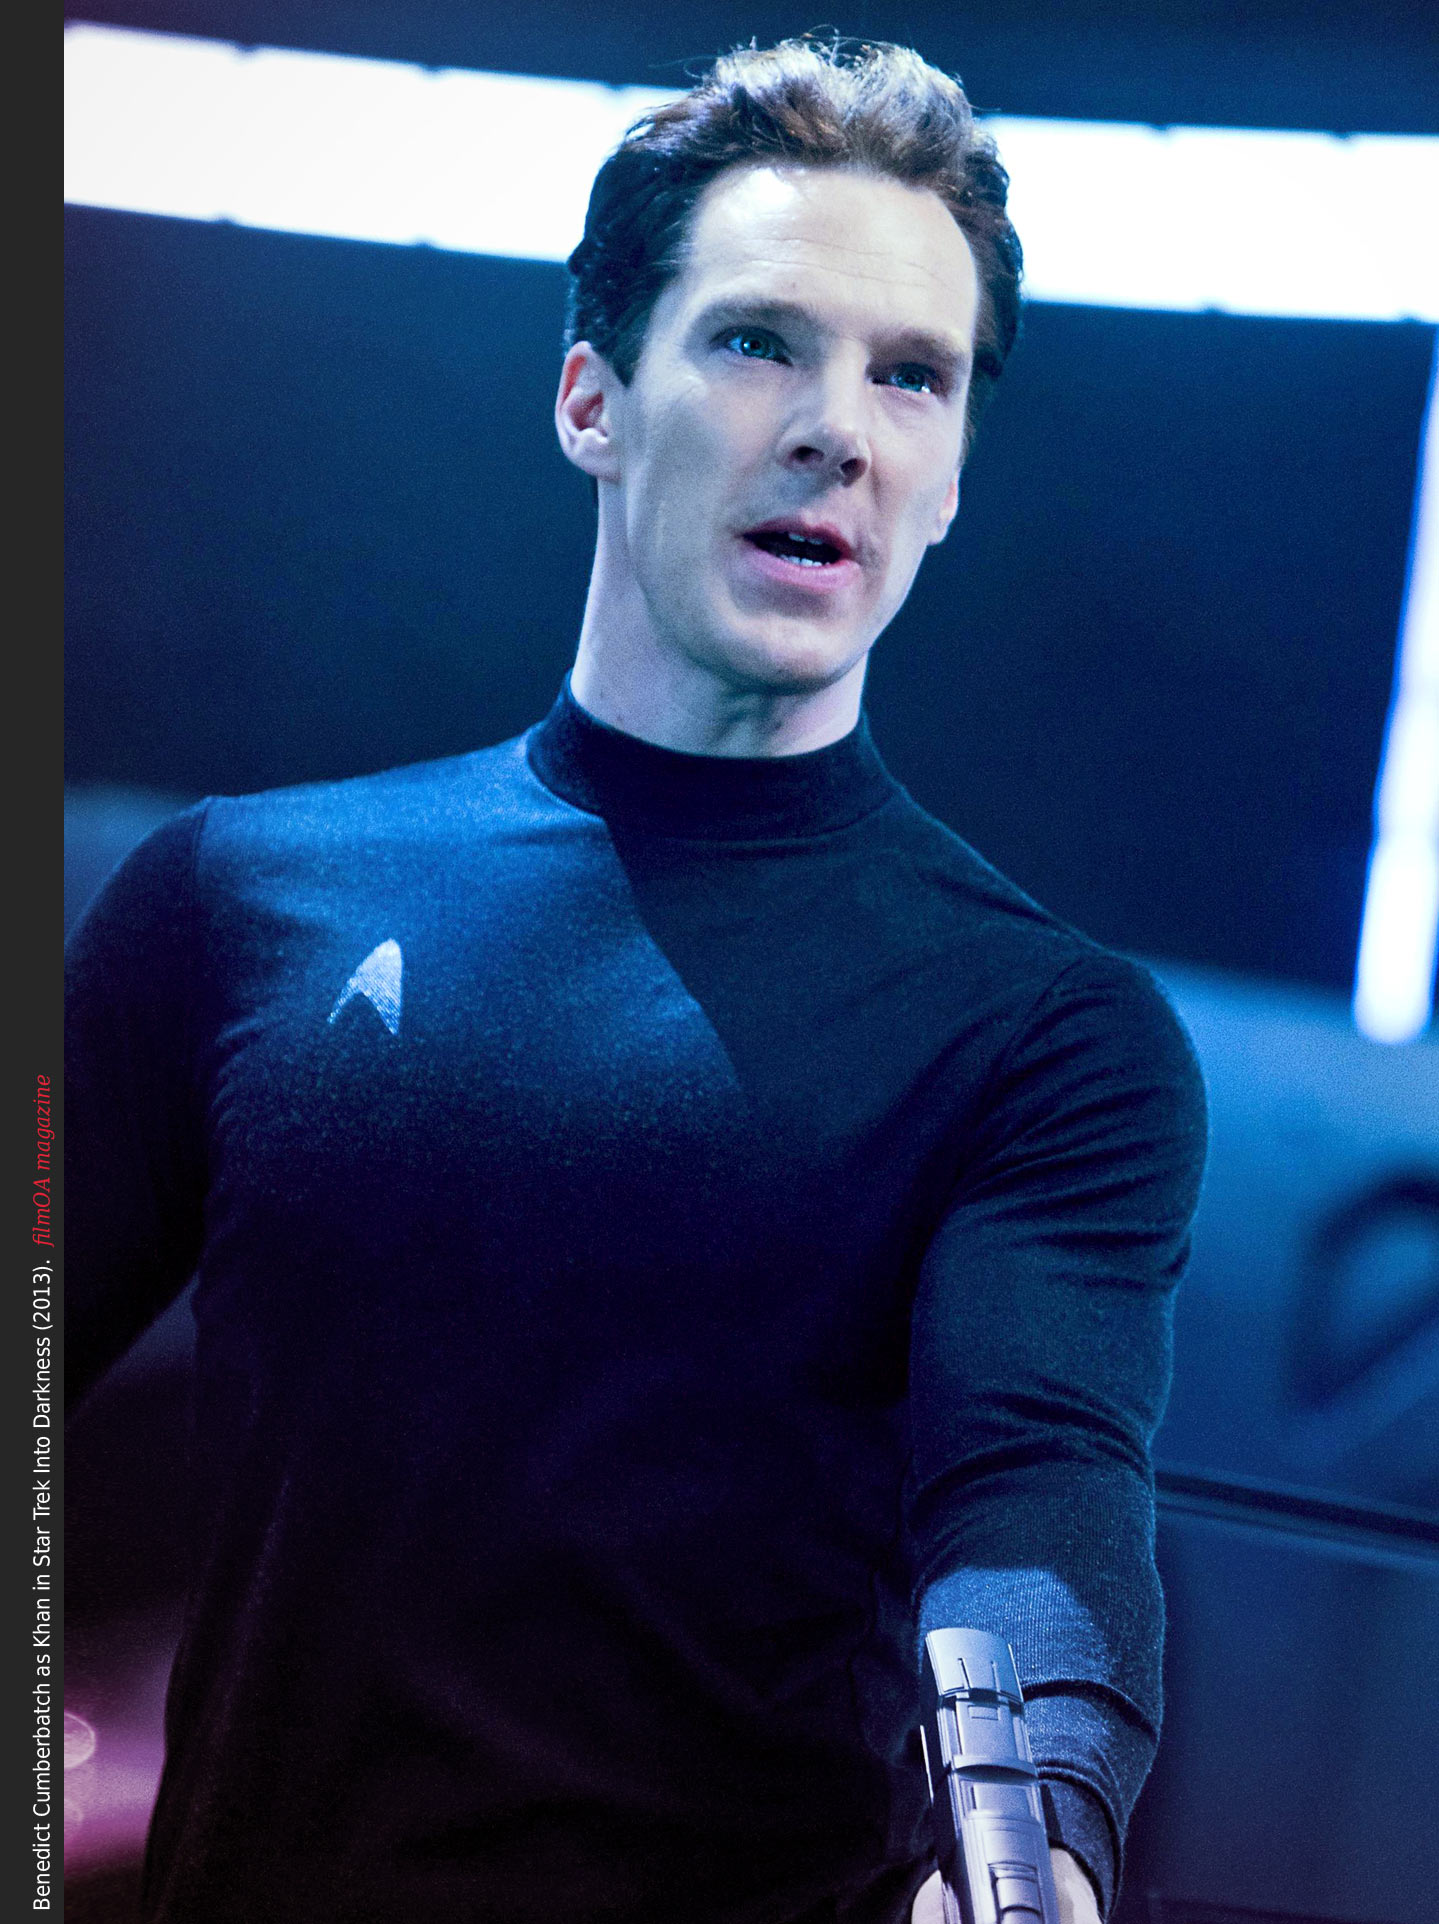 Benedict Cumberbatch as Khan in Star Trek Into Darkness 2013